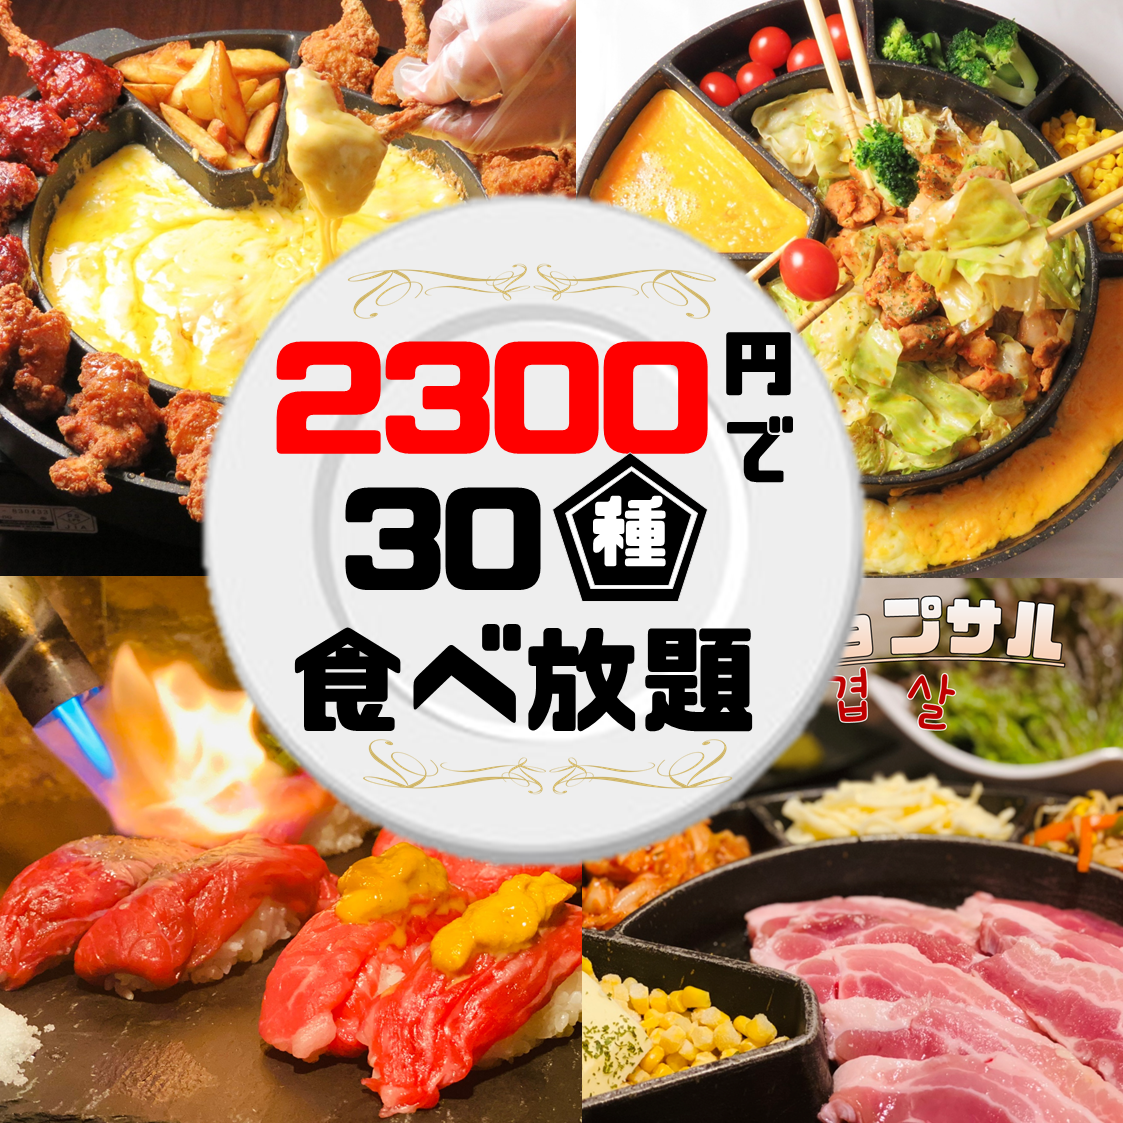 2H 無限暢飲 + choa 雞 + 零食 1 件 3500 日元 ⇒ 2300 日元